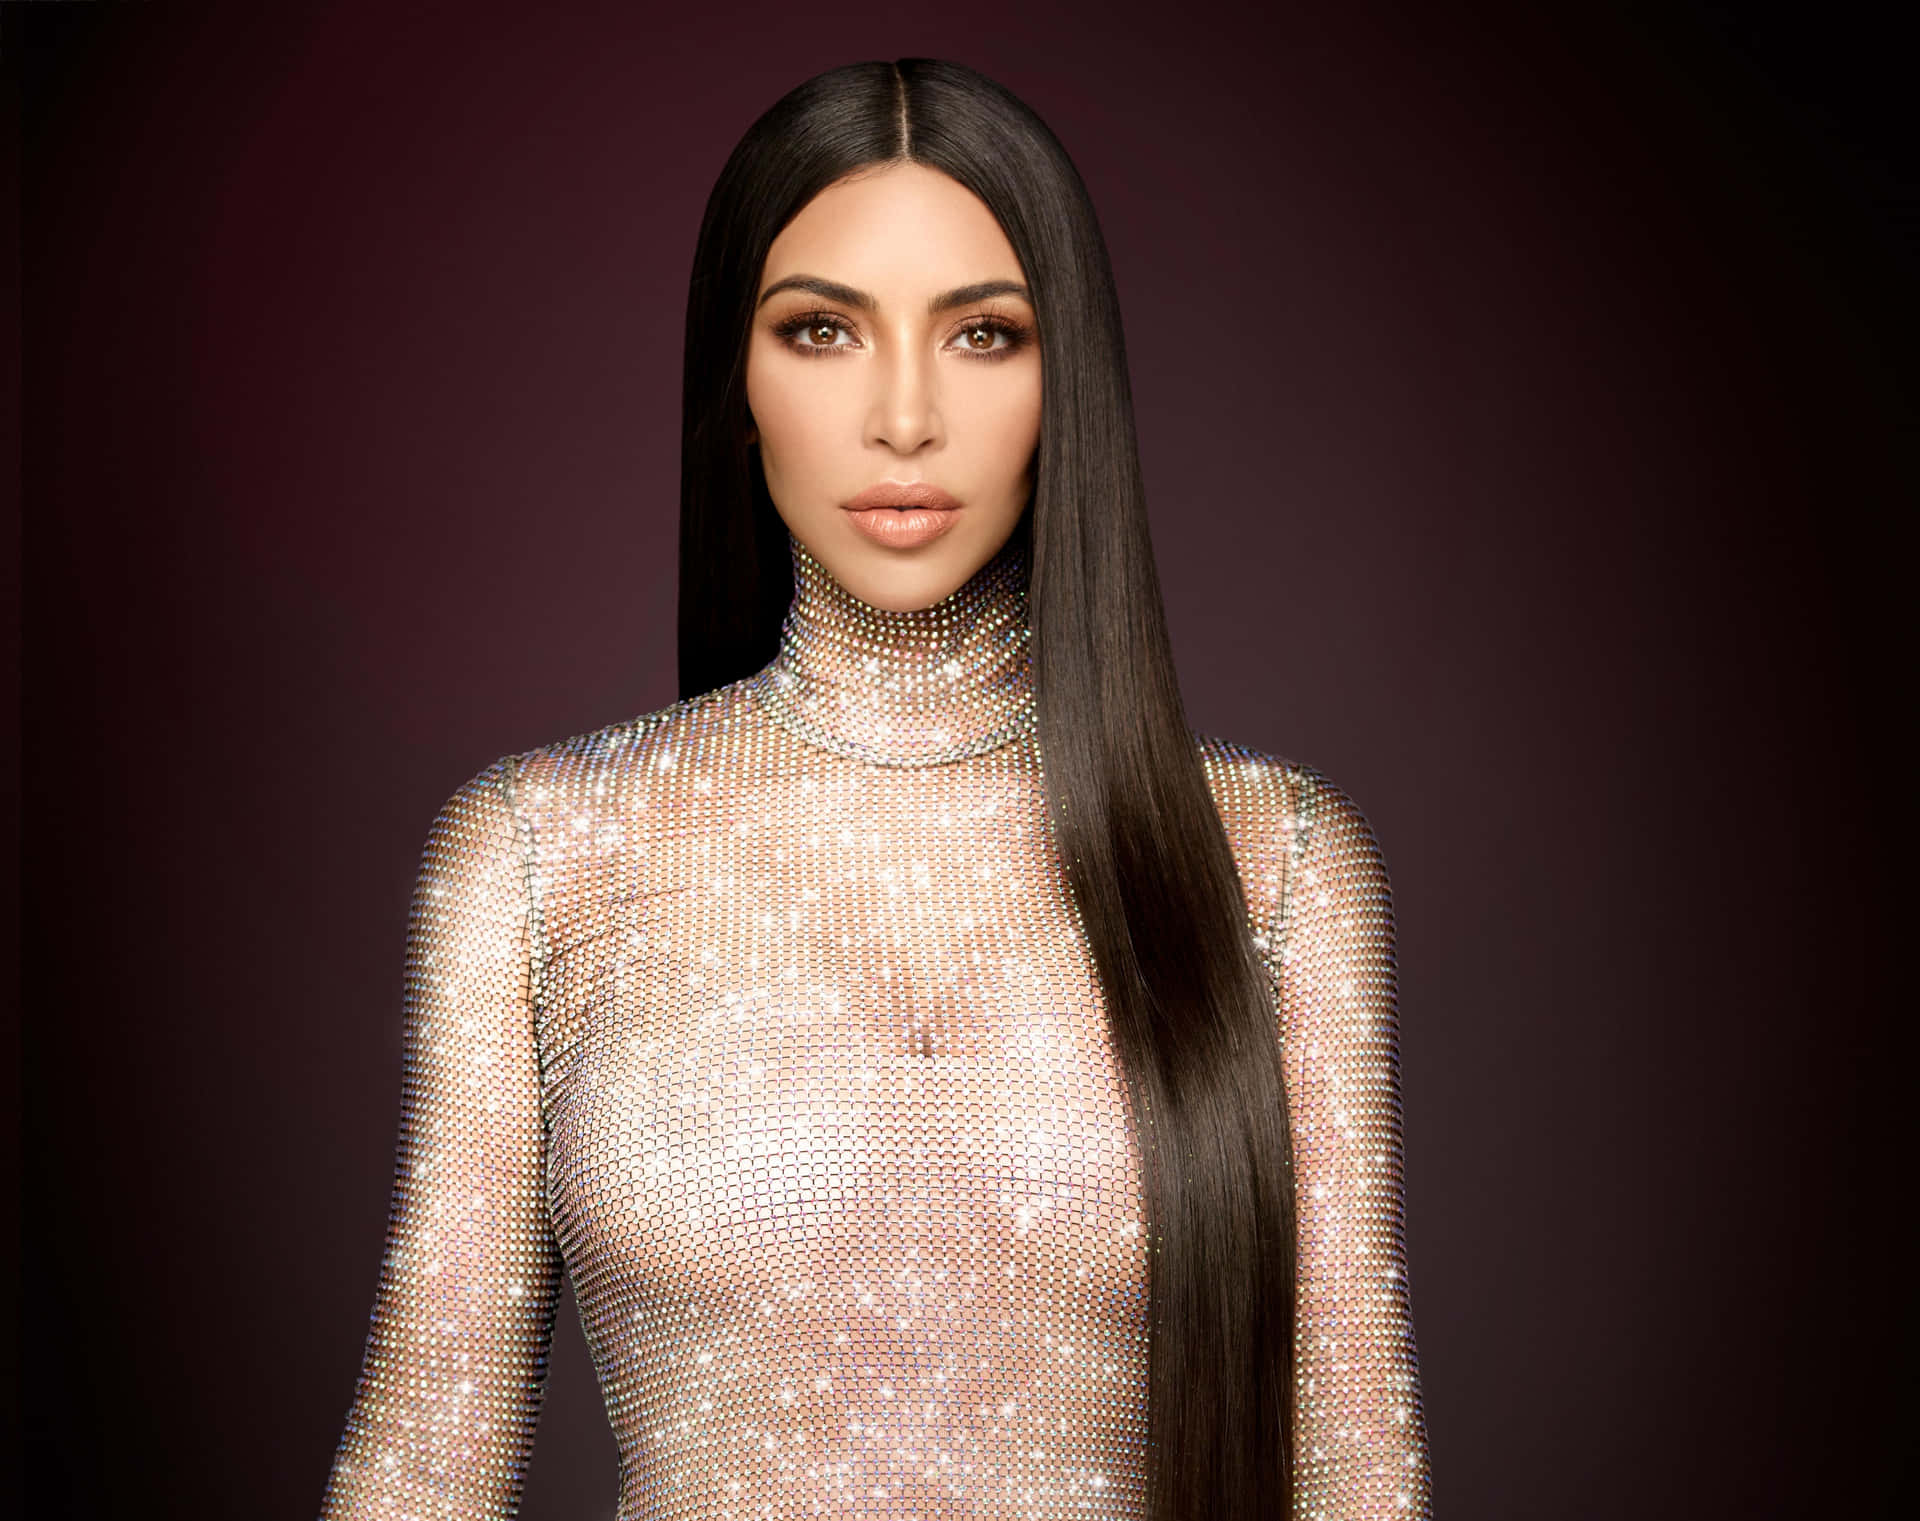 Kim Kardashian looking glamorous in a glamorous outfit